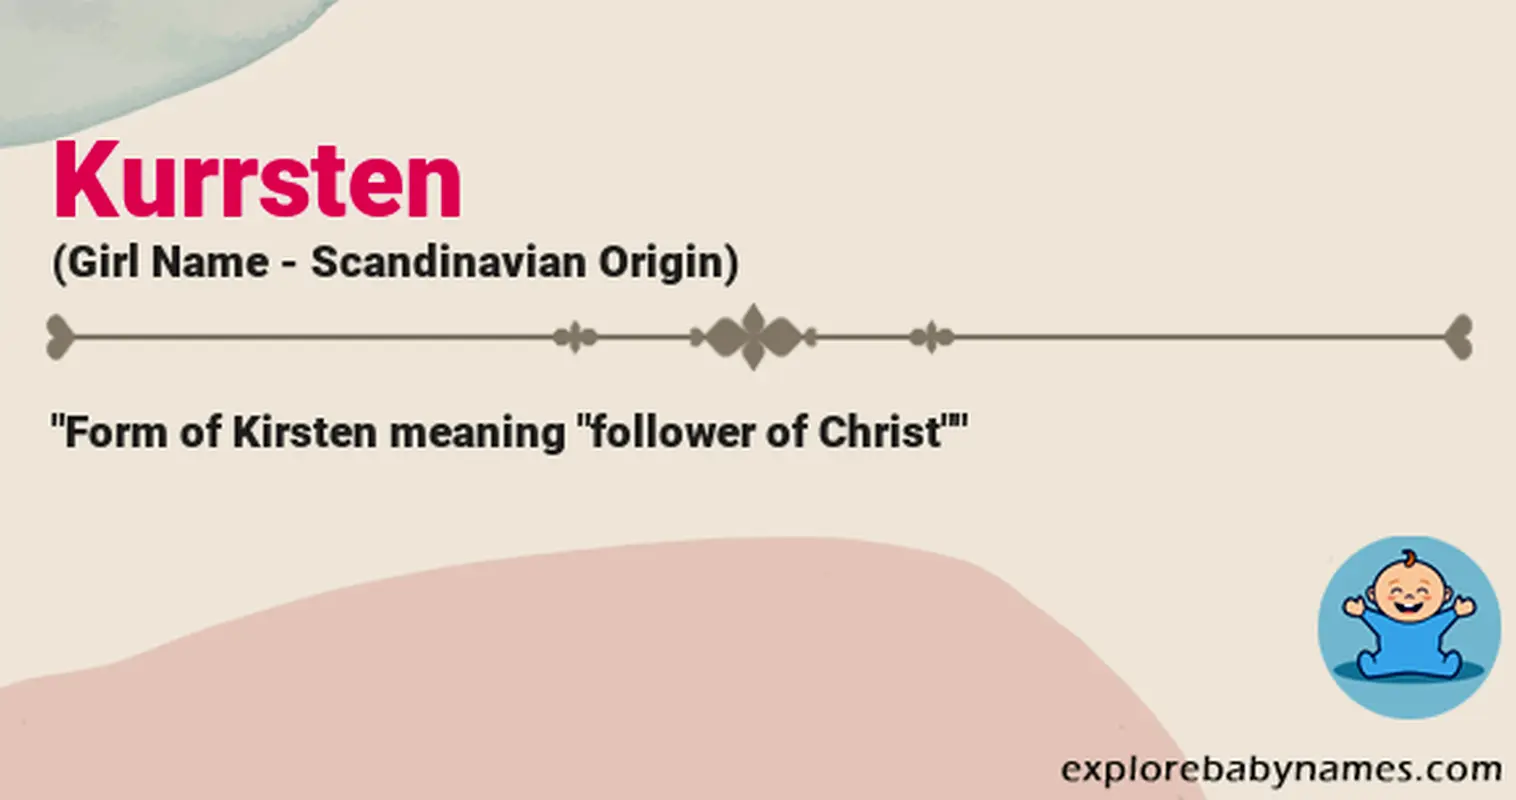 Meaning of Kurrsten